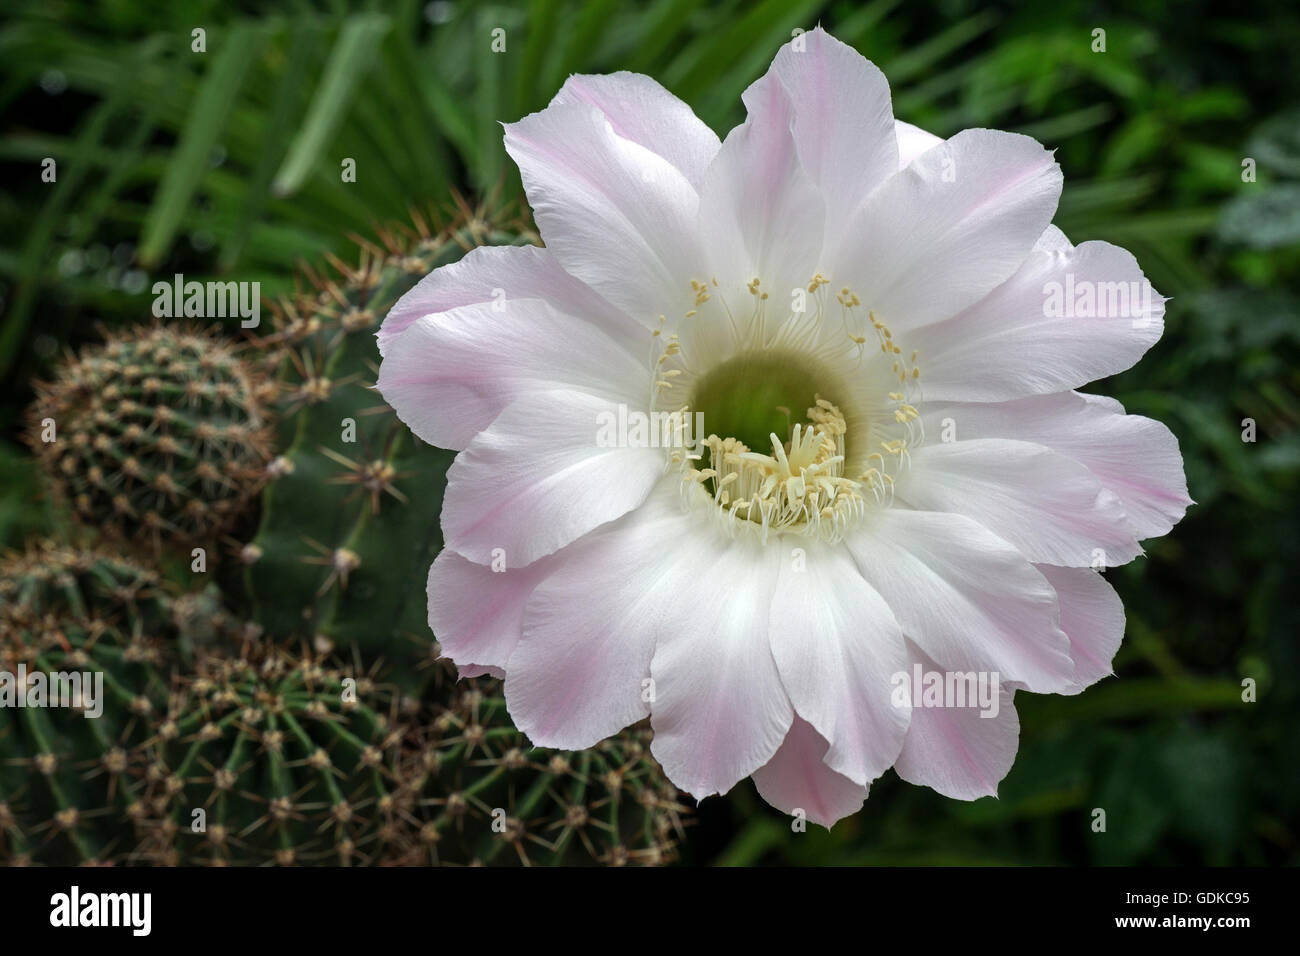 Flowering cactus (Echinopsis sp.), whitish pink flower, Baden-Württemberg, Germany Stock Photo